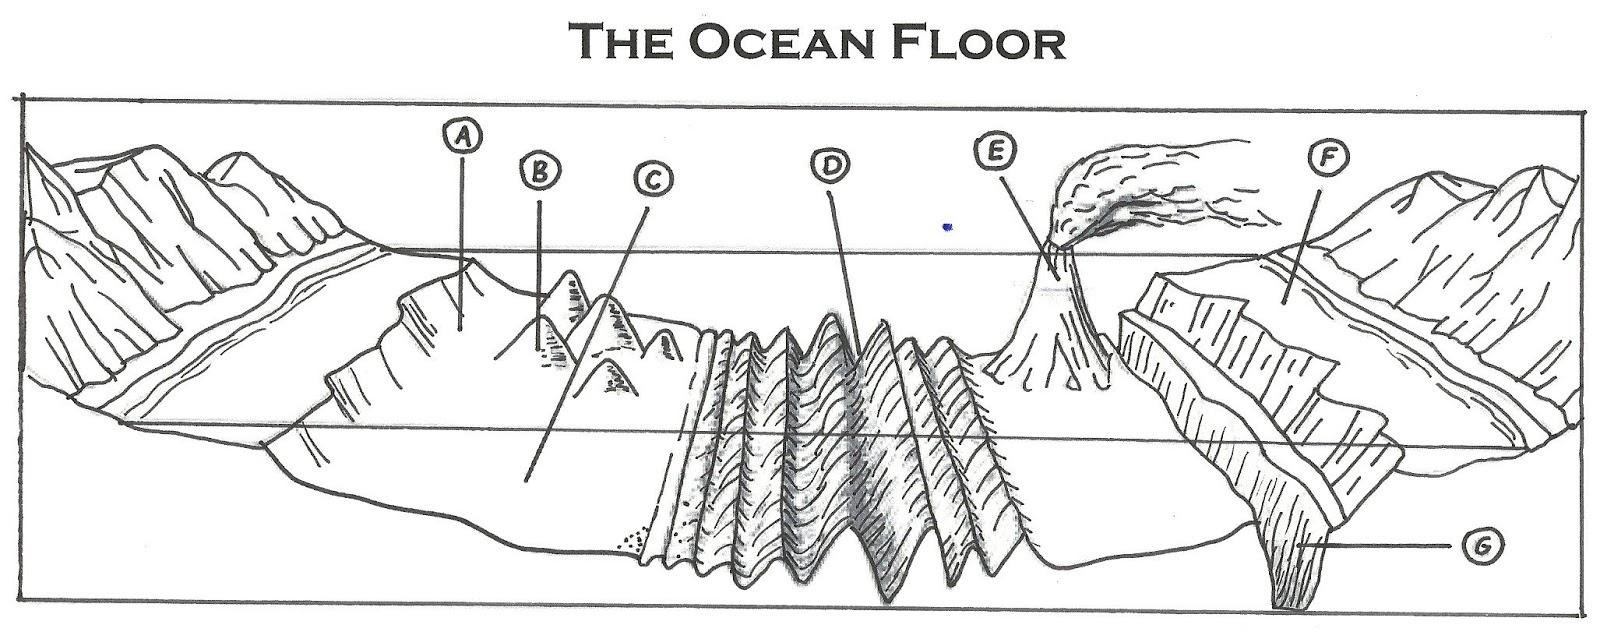 underwater mountain ranges diagram